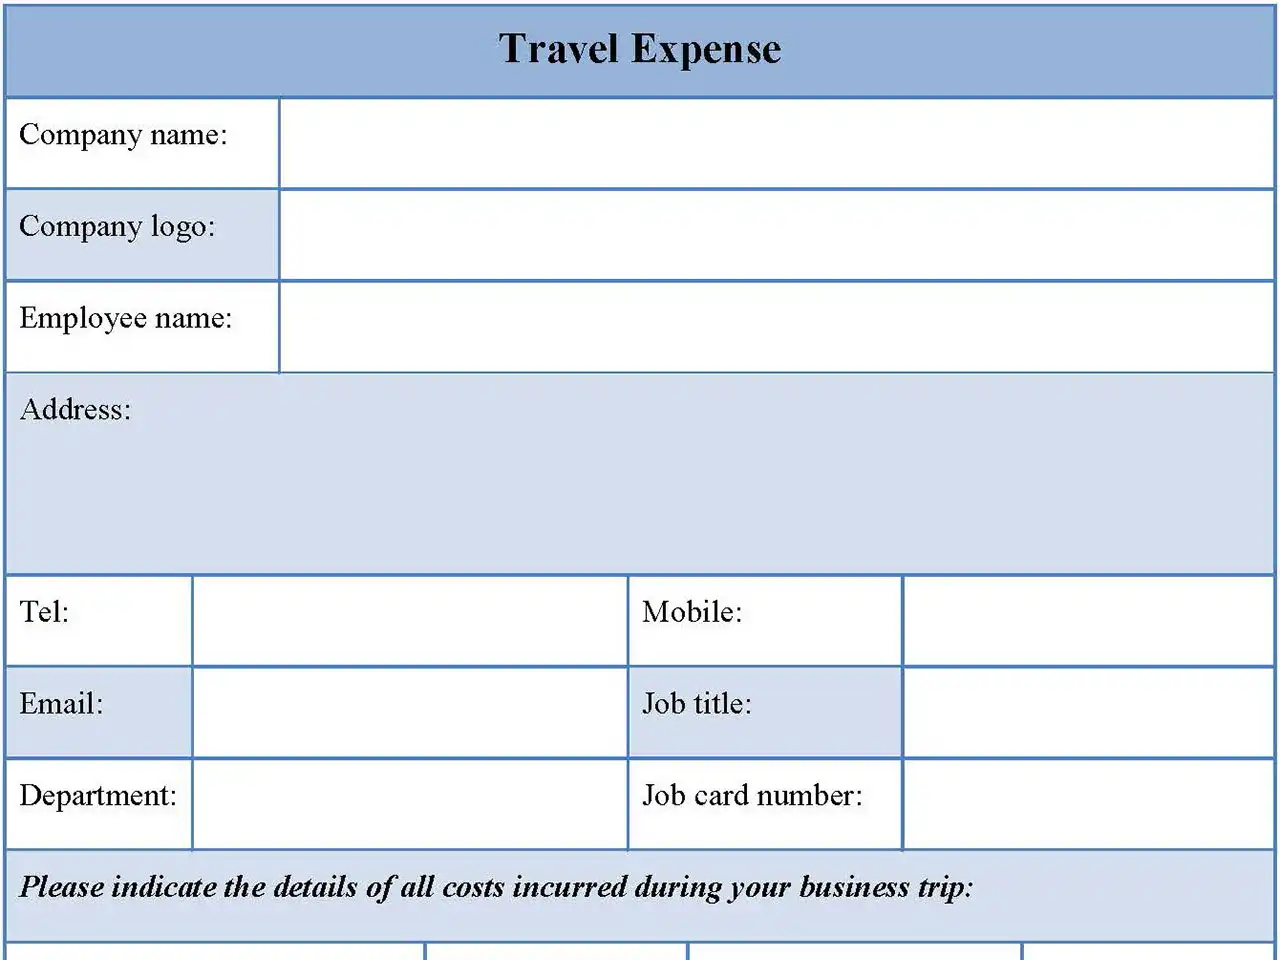 Travel Expense Form